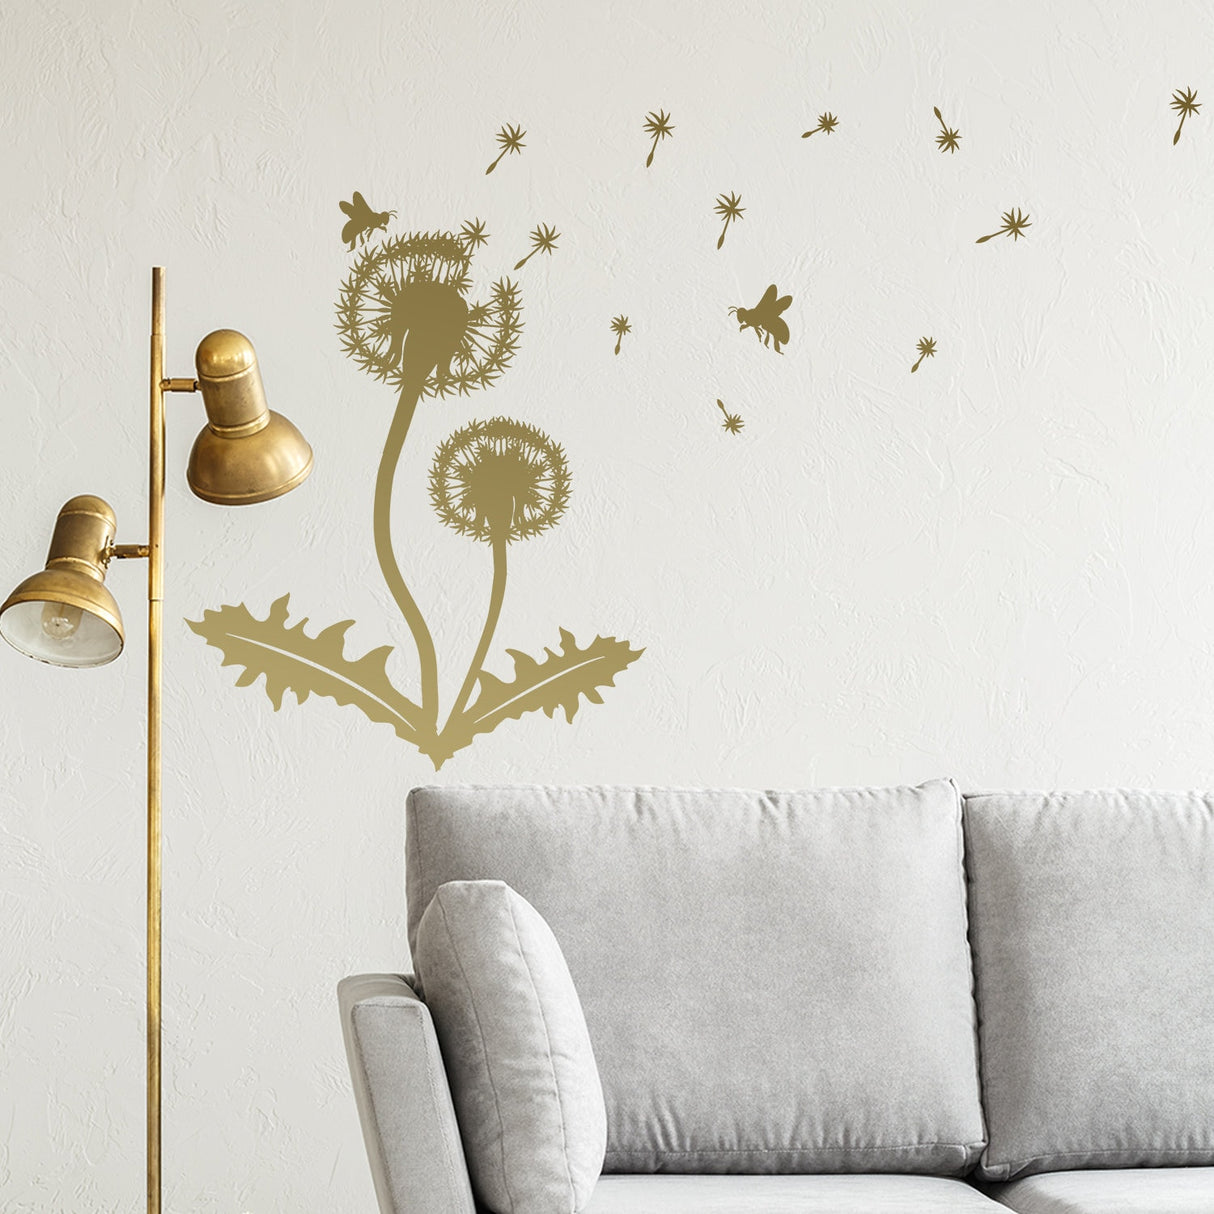 Dandelion Wall Decor Decal - Large Flower Vinyl Art Sticker For Bedroom Living Room Bathroom